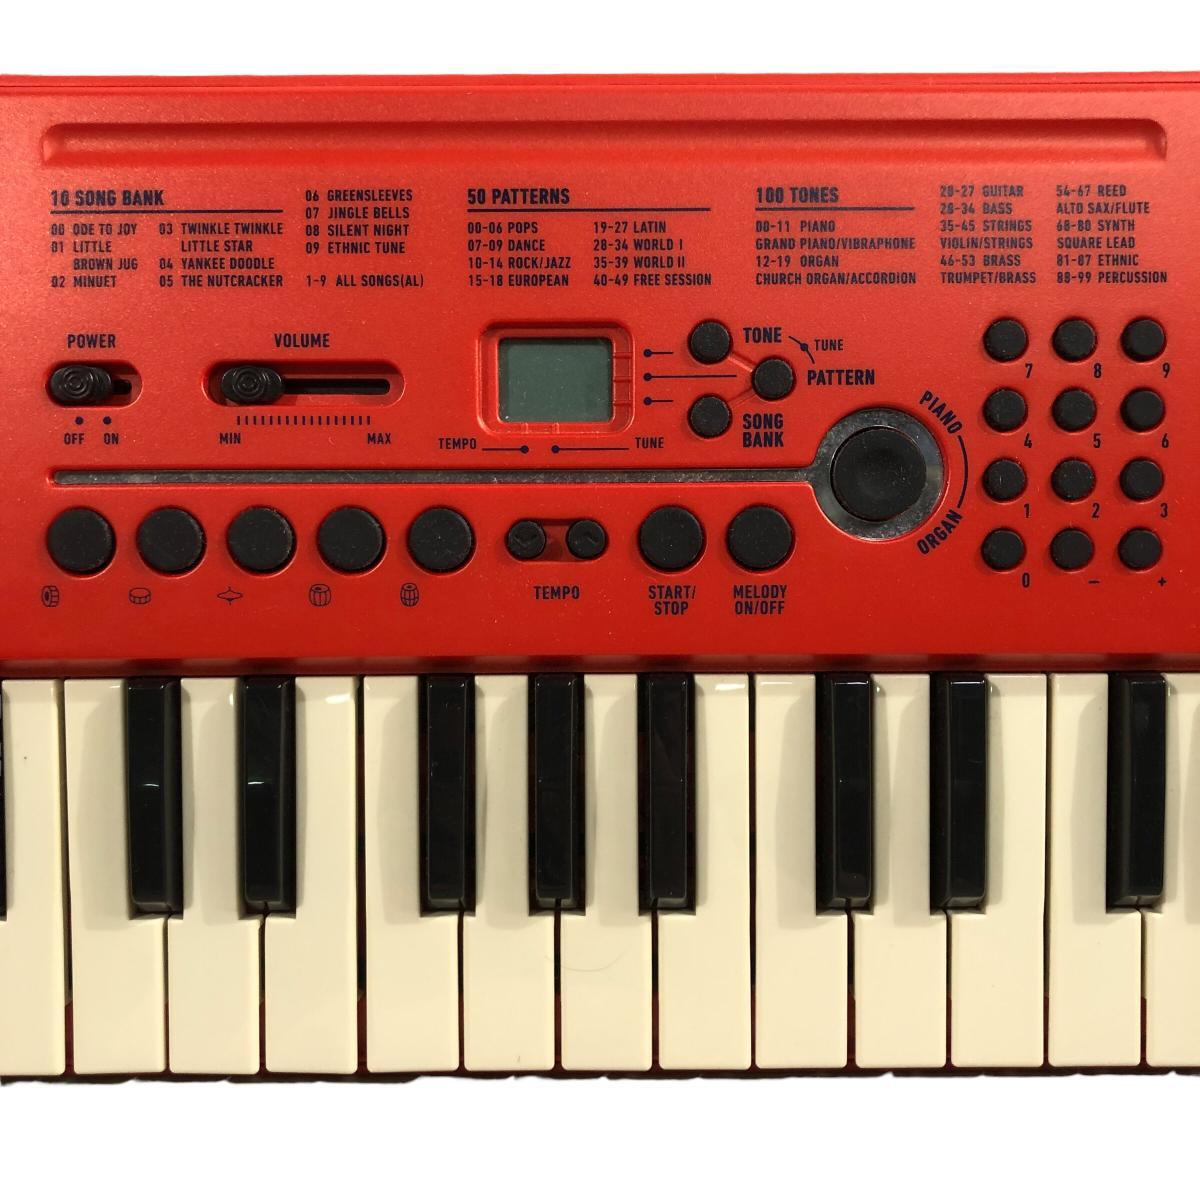  electron keyboard Casio UK-01 red compact Mini size musical instruments machinery art and Be tsu electrification OK junk treatment 